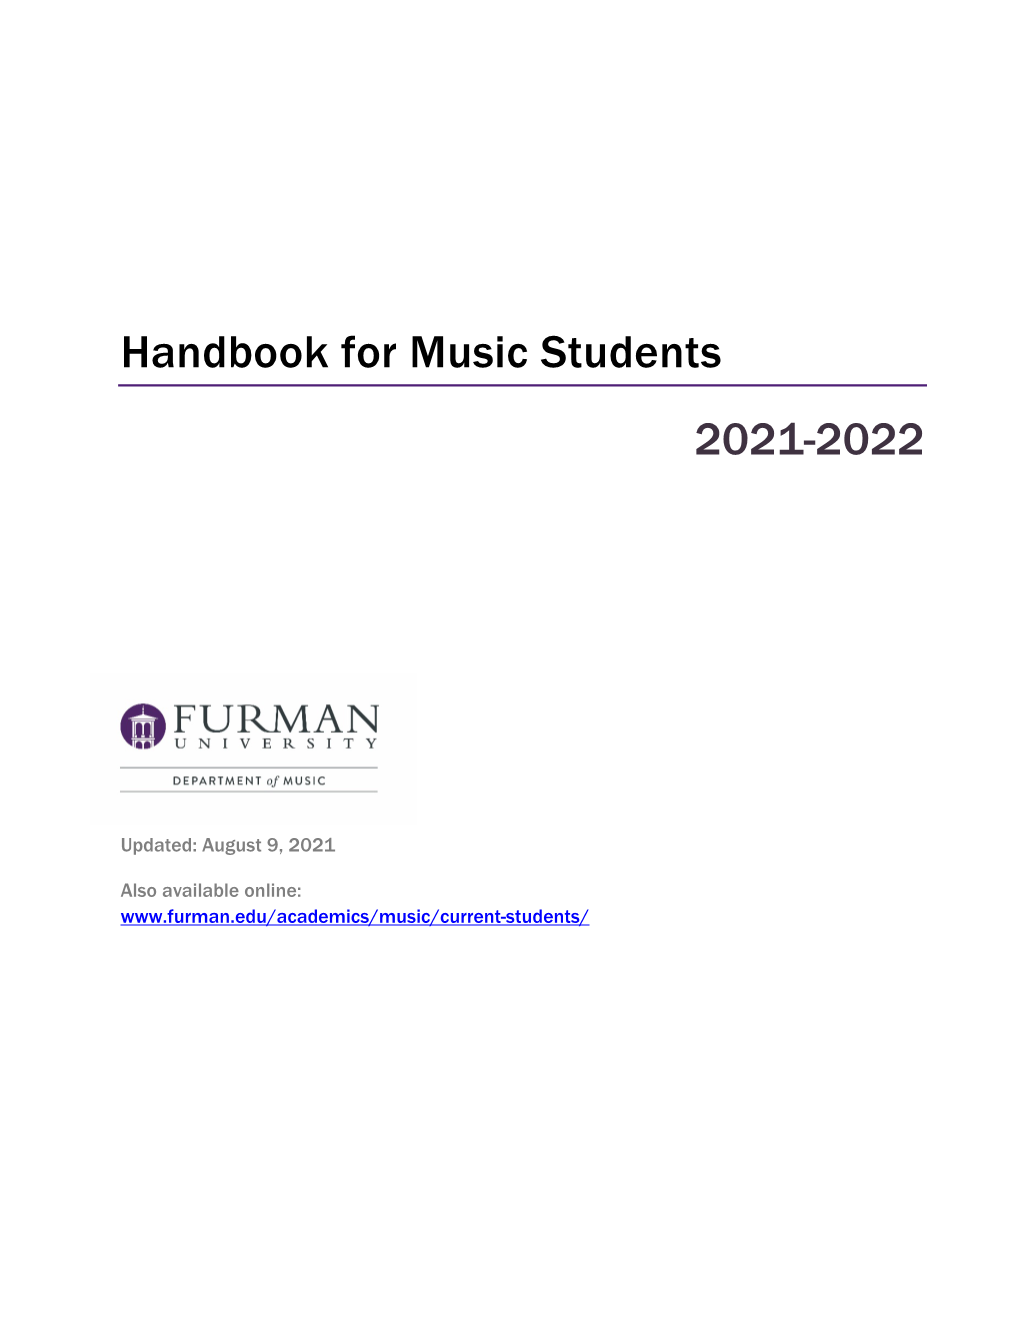 Music Handbook 2021-22